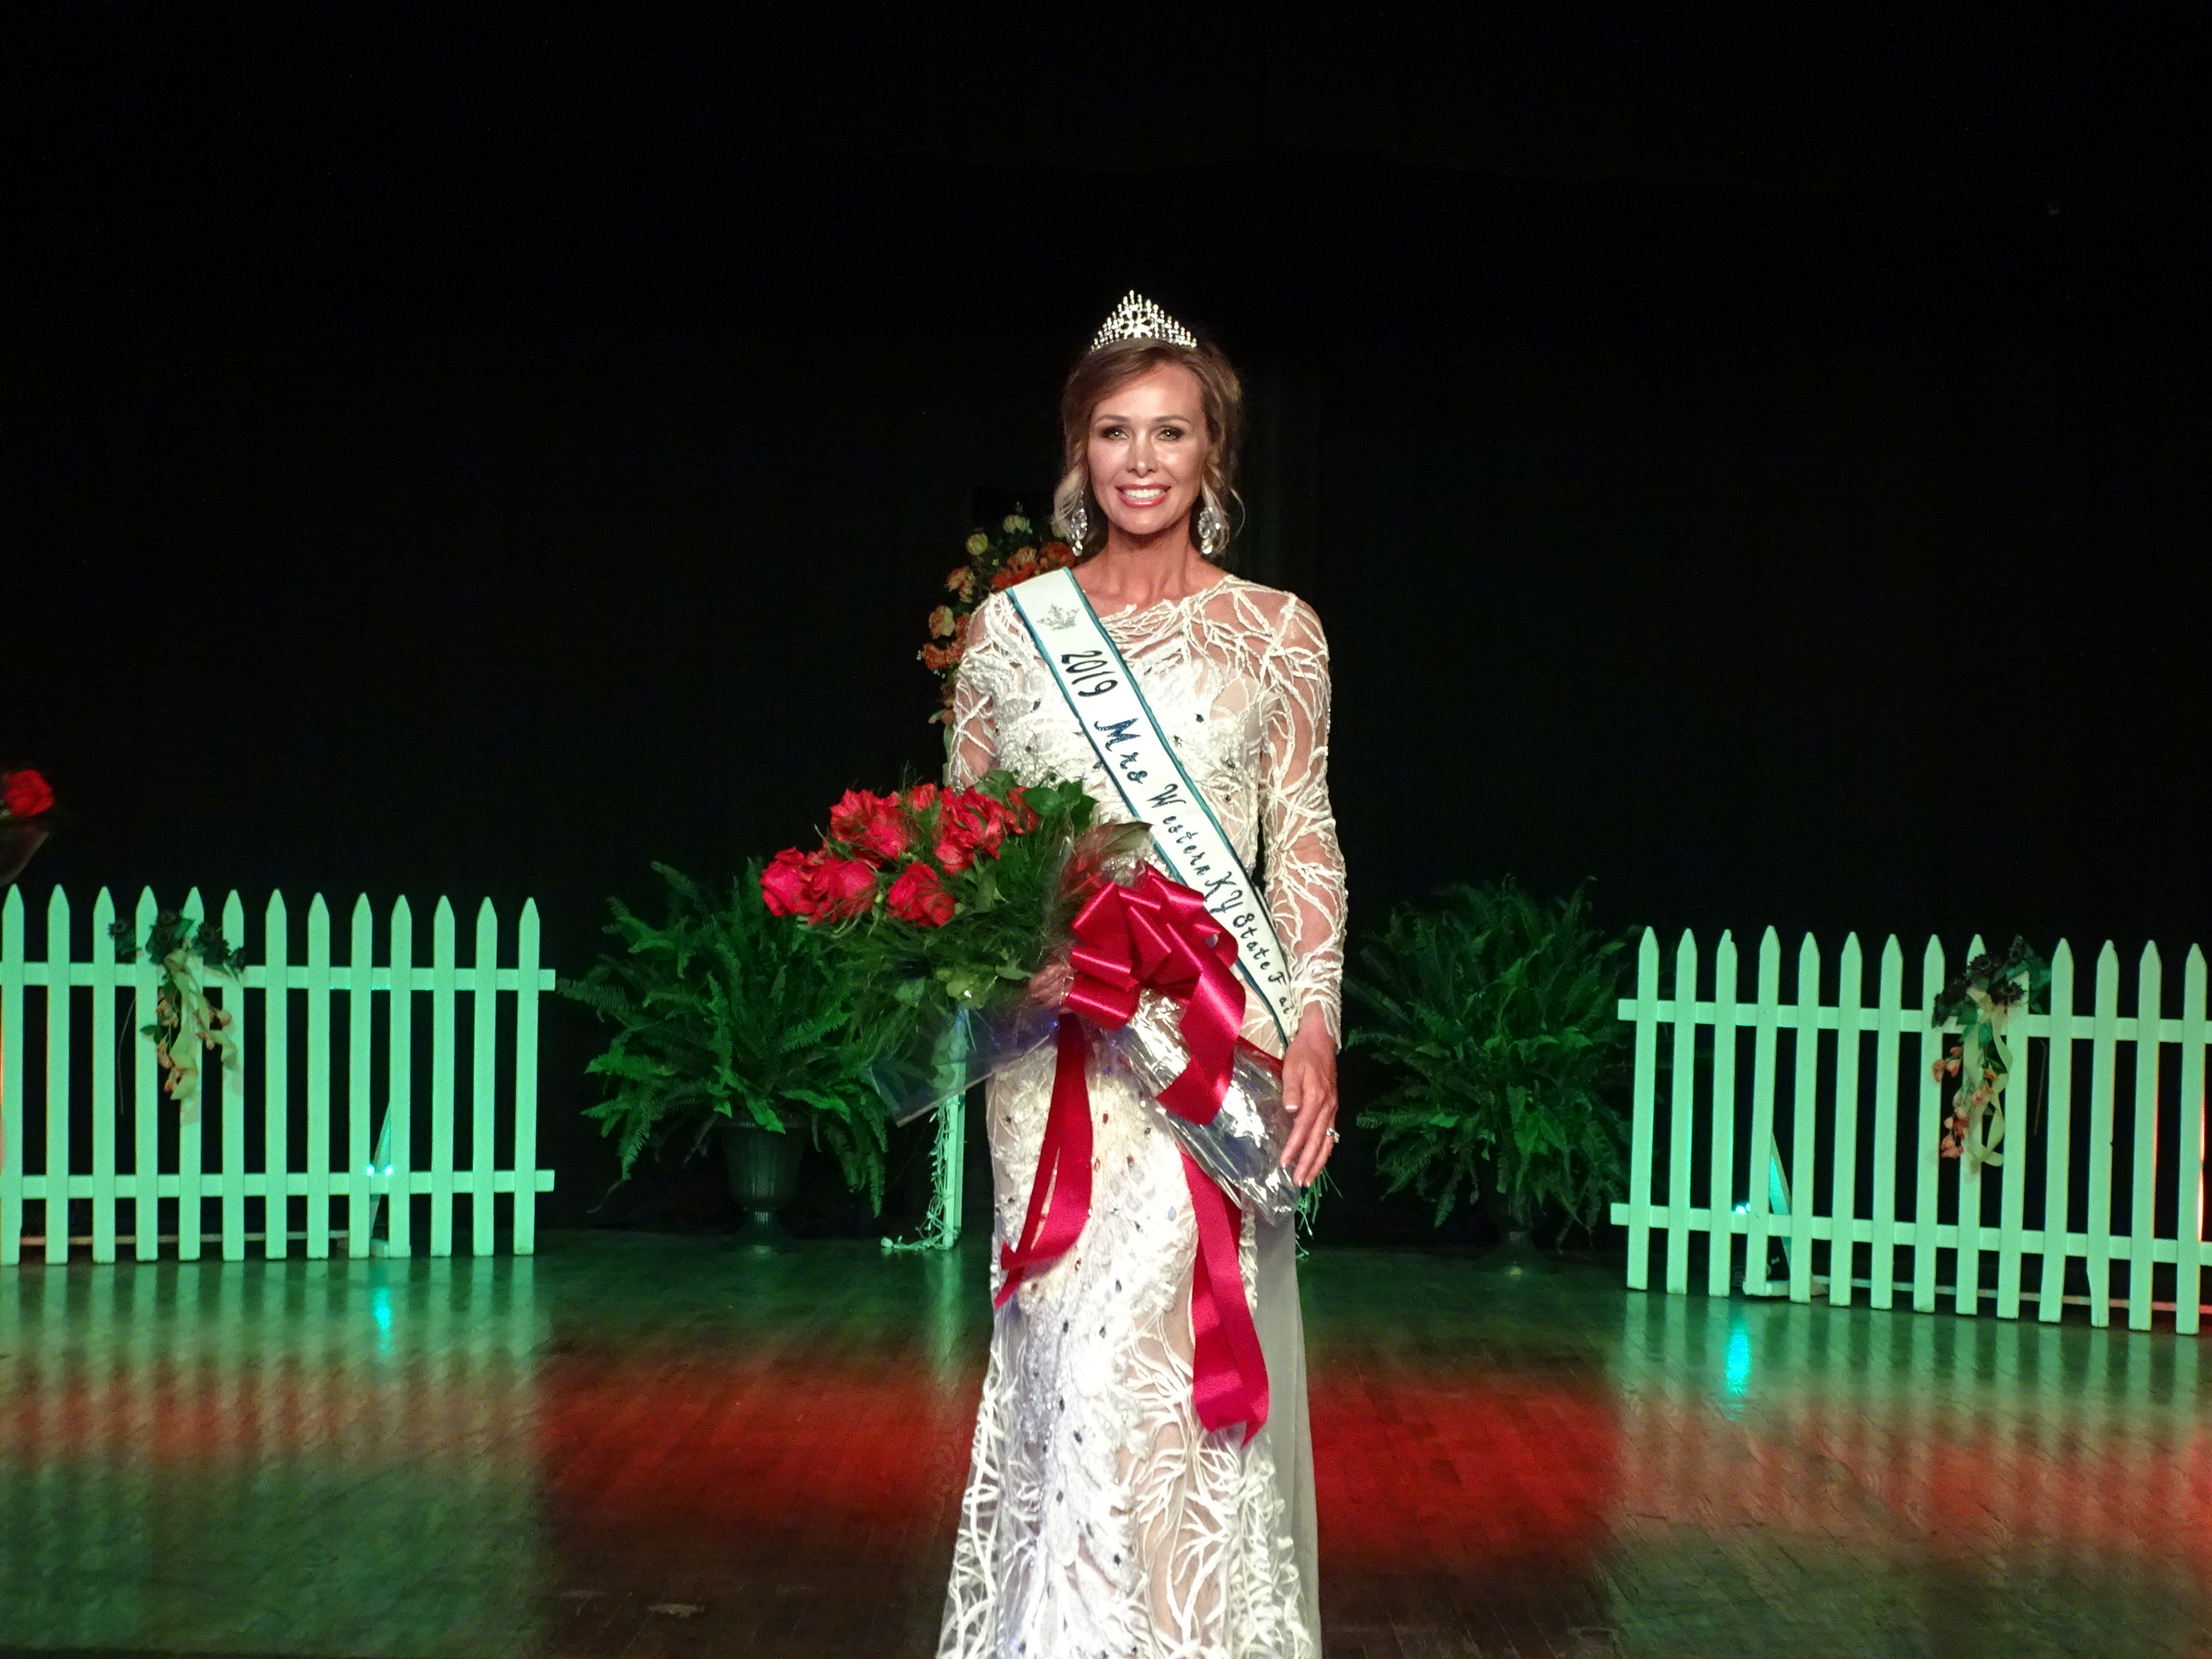 Winner Crowned for Mrs. Western Kentucky State Fair WHVOFM